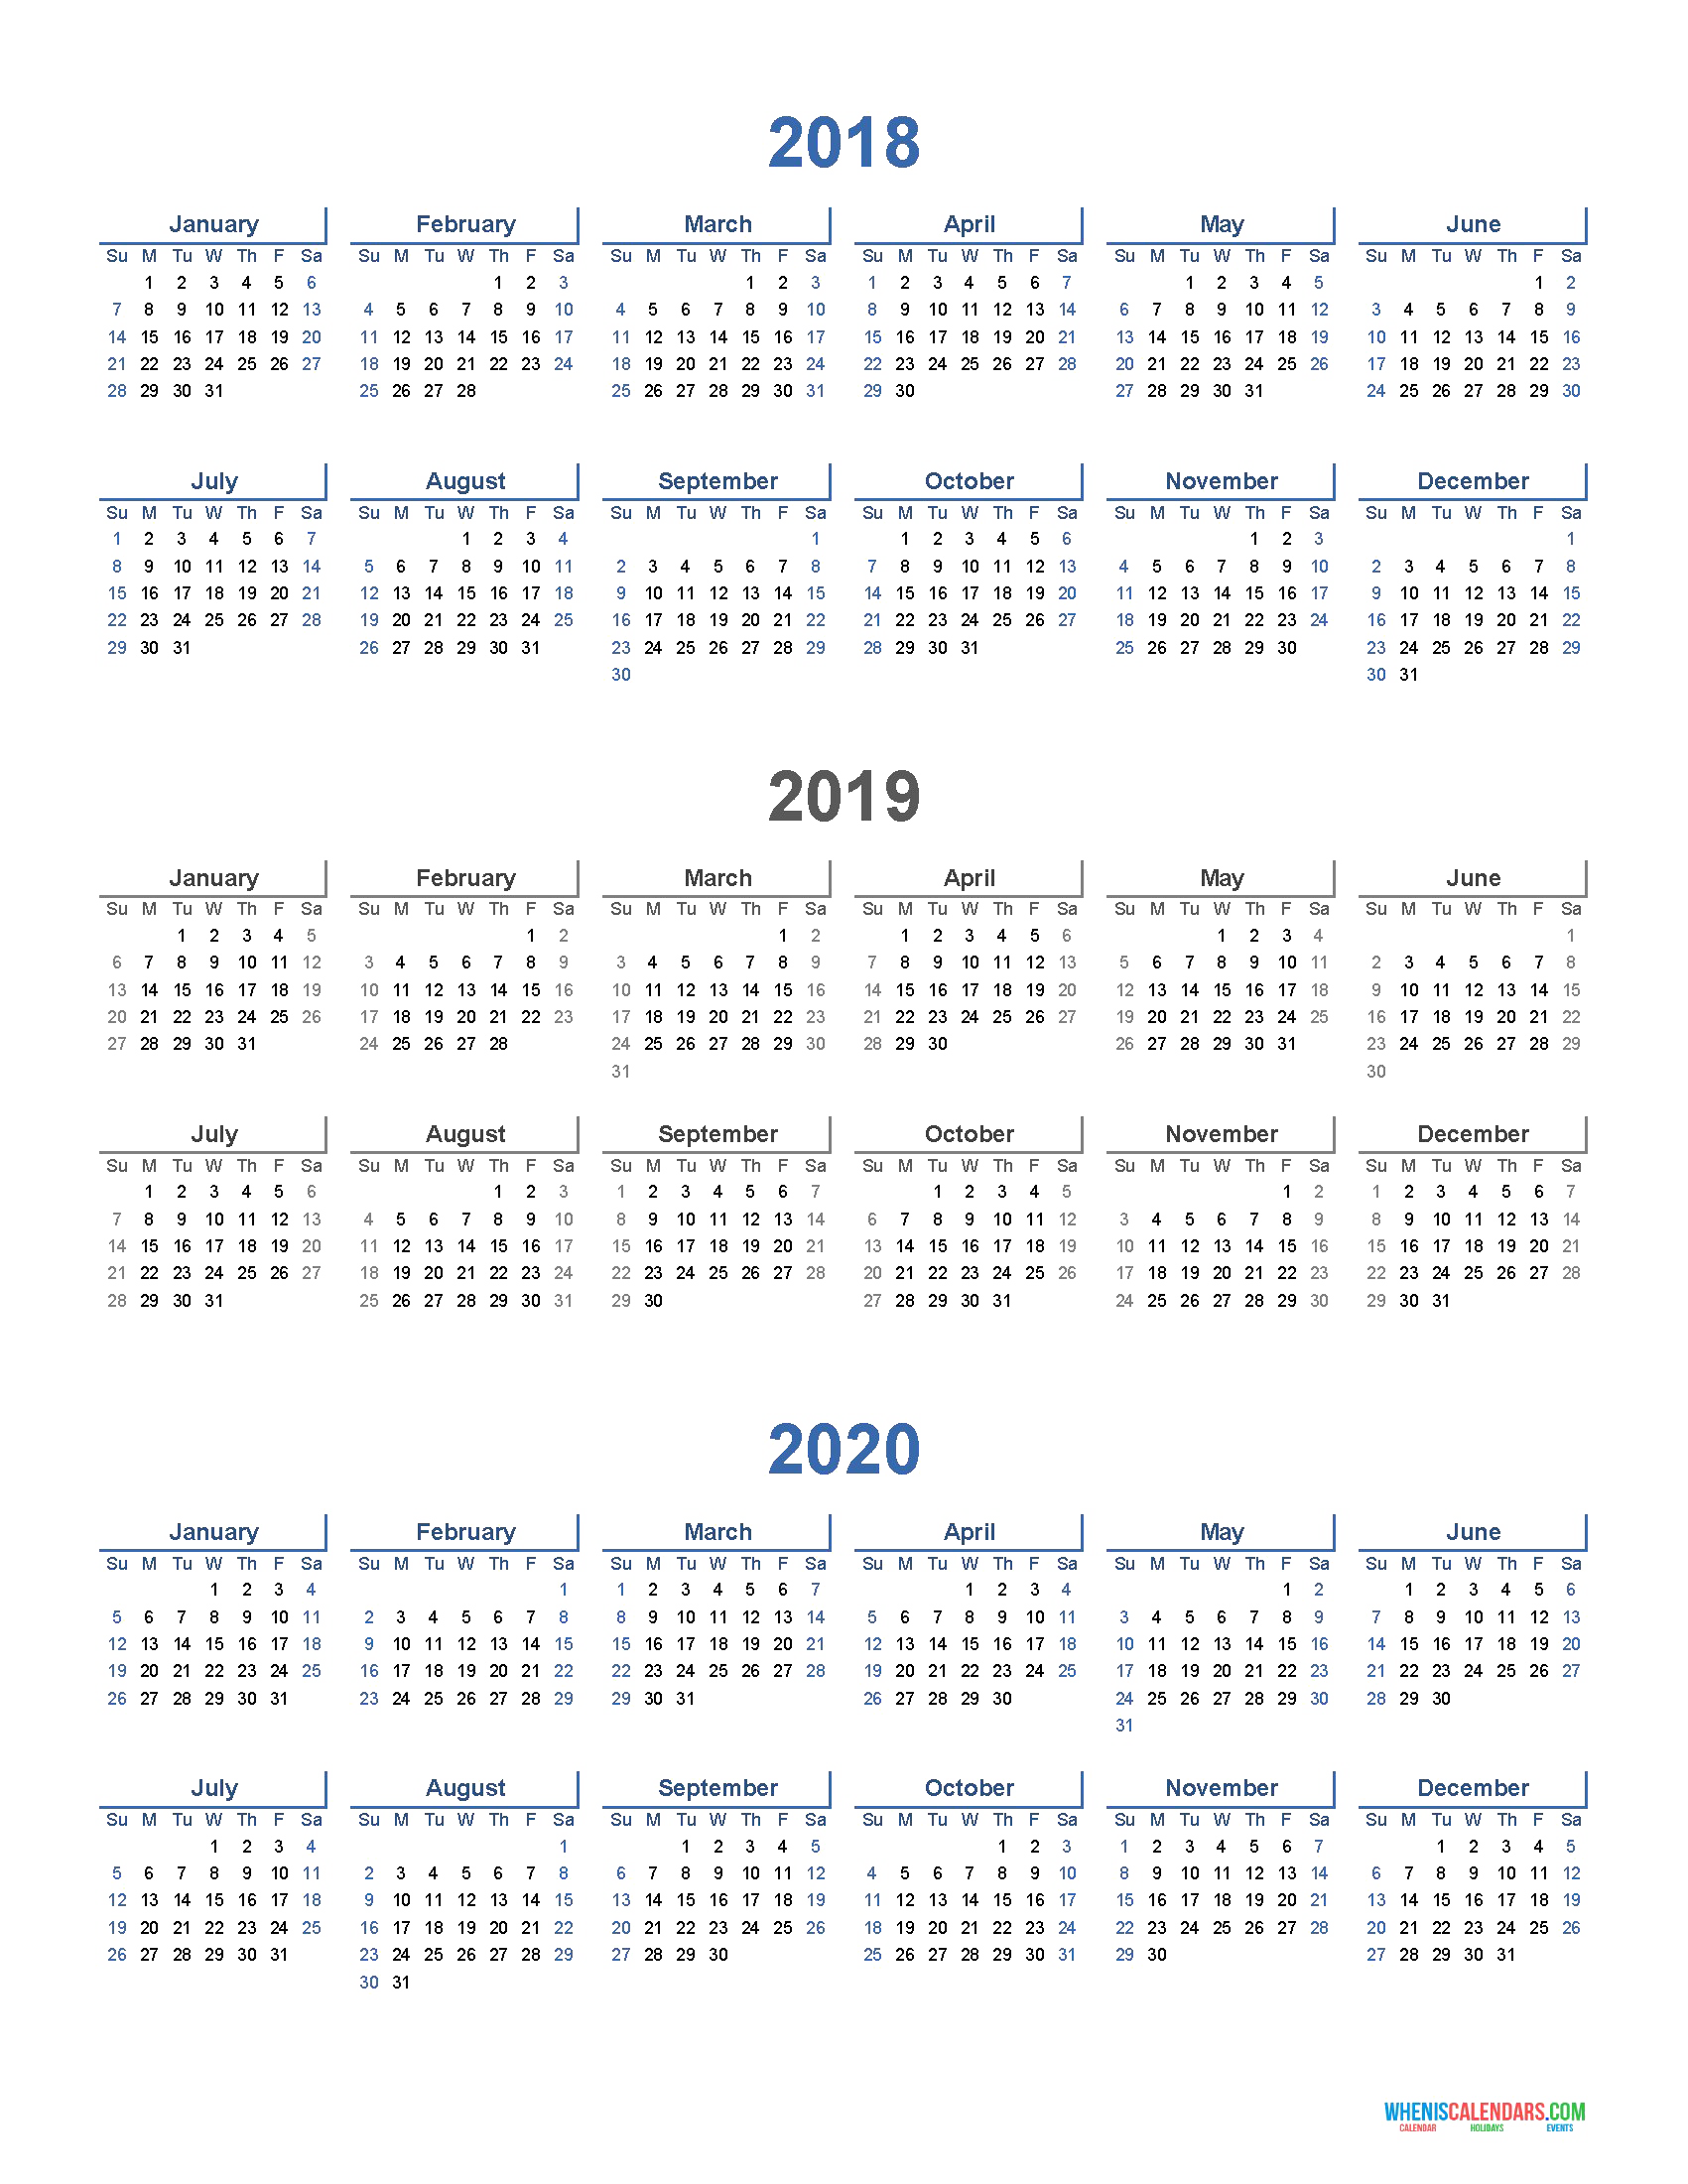 2020 Calendar PNG Transparent Picture